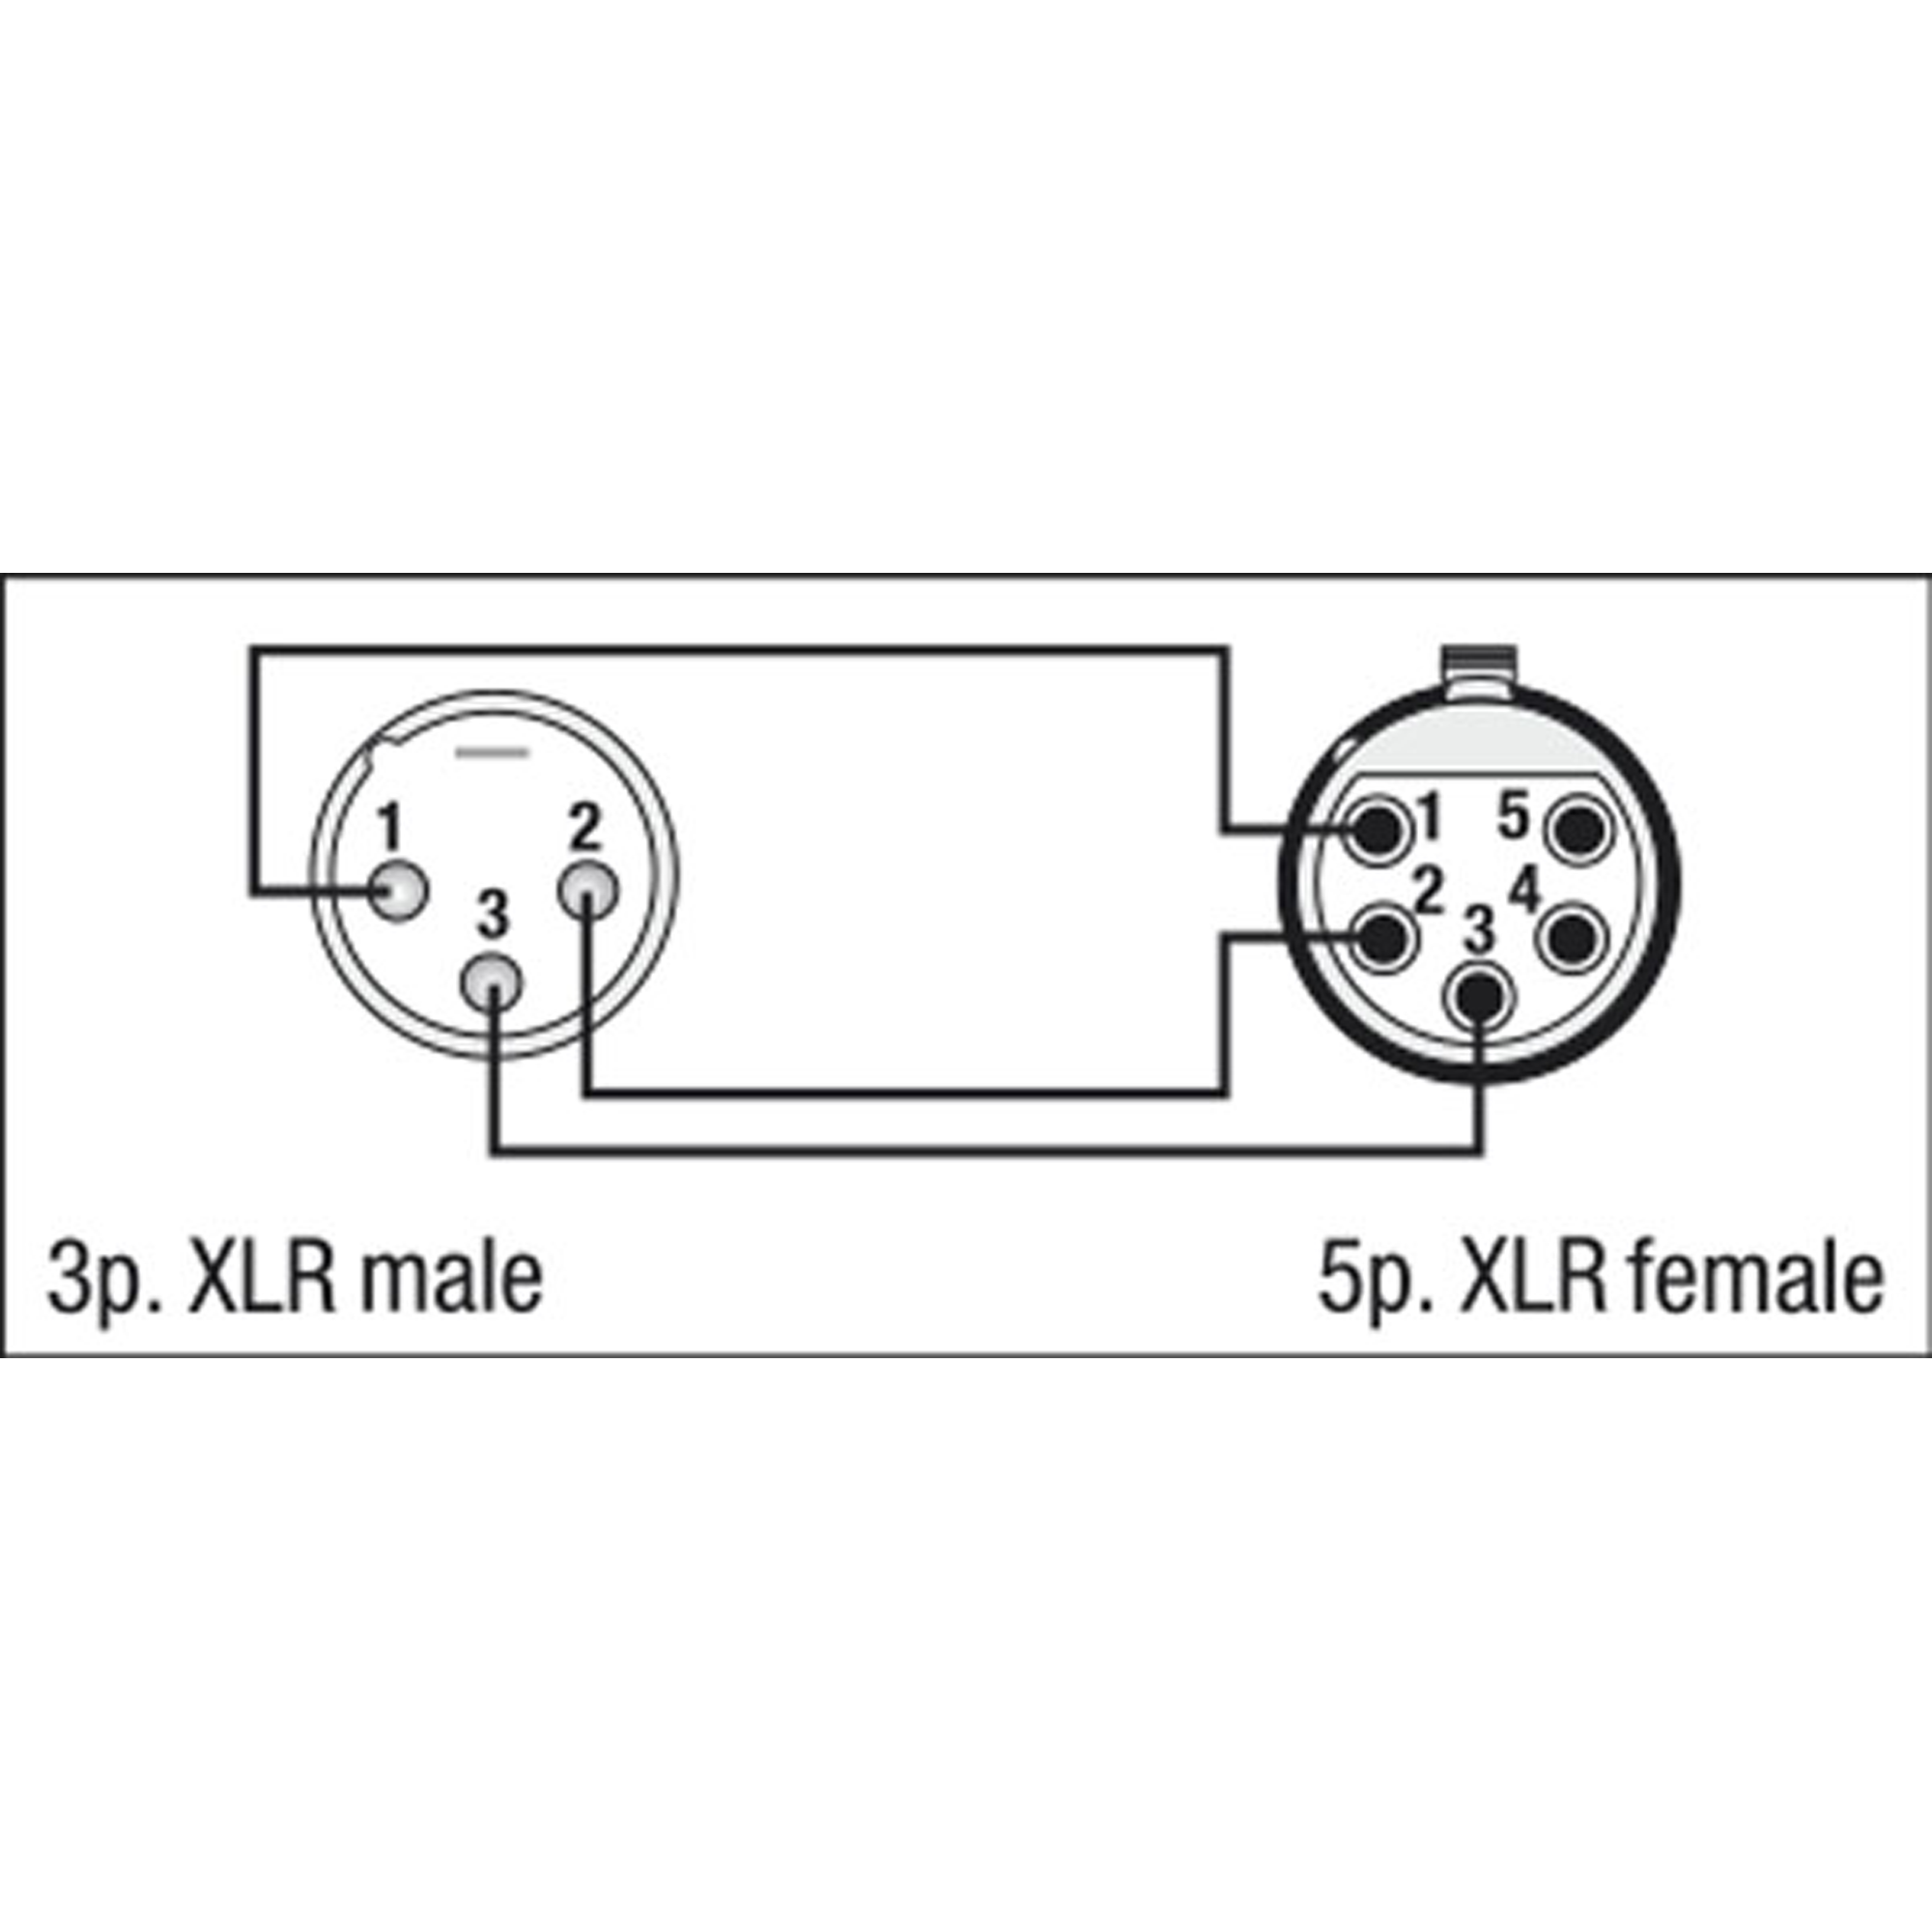 DAP FLA30 - XLR 5P female to XLR 3P male adapter 3P. XLR (Male)>5P. XLR-DMX-Adapter - female